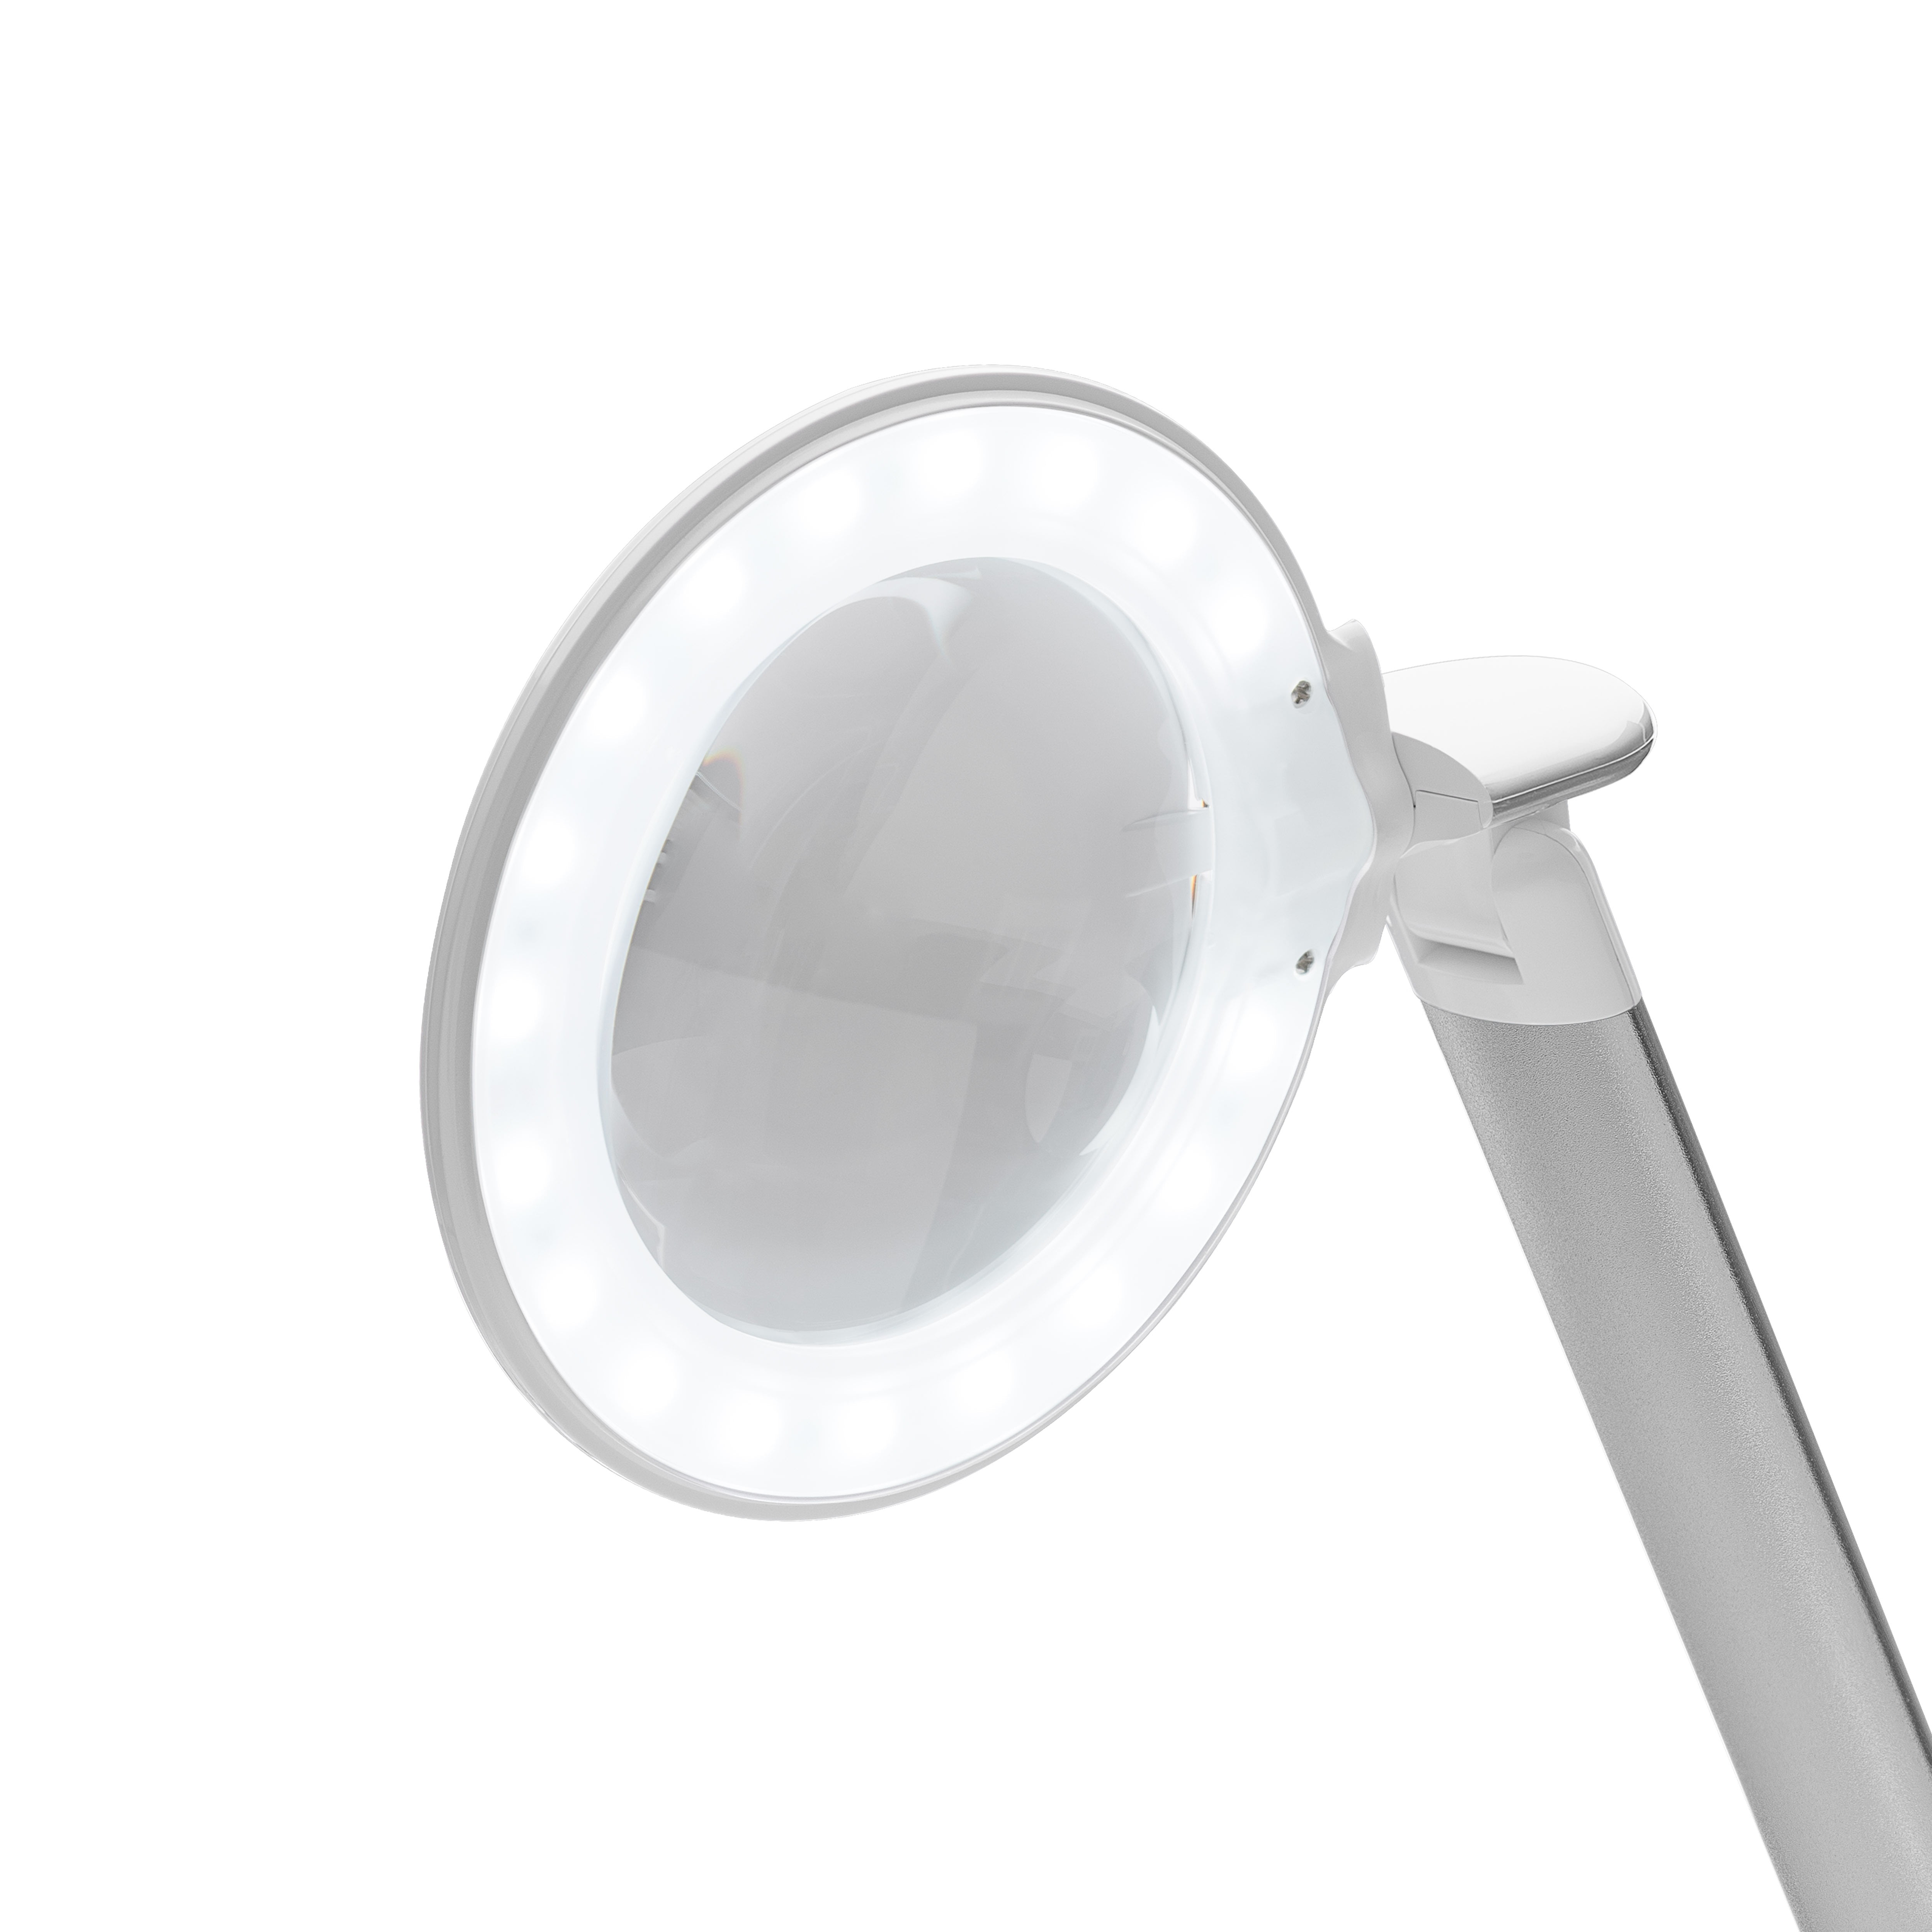 Daylight Company Halo Table Magnifying Lamp U25200